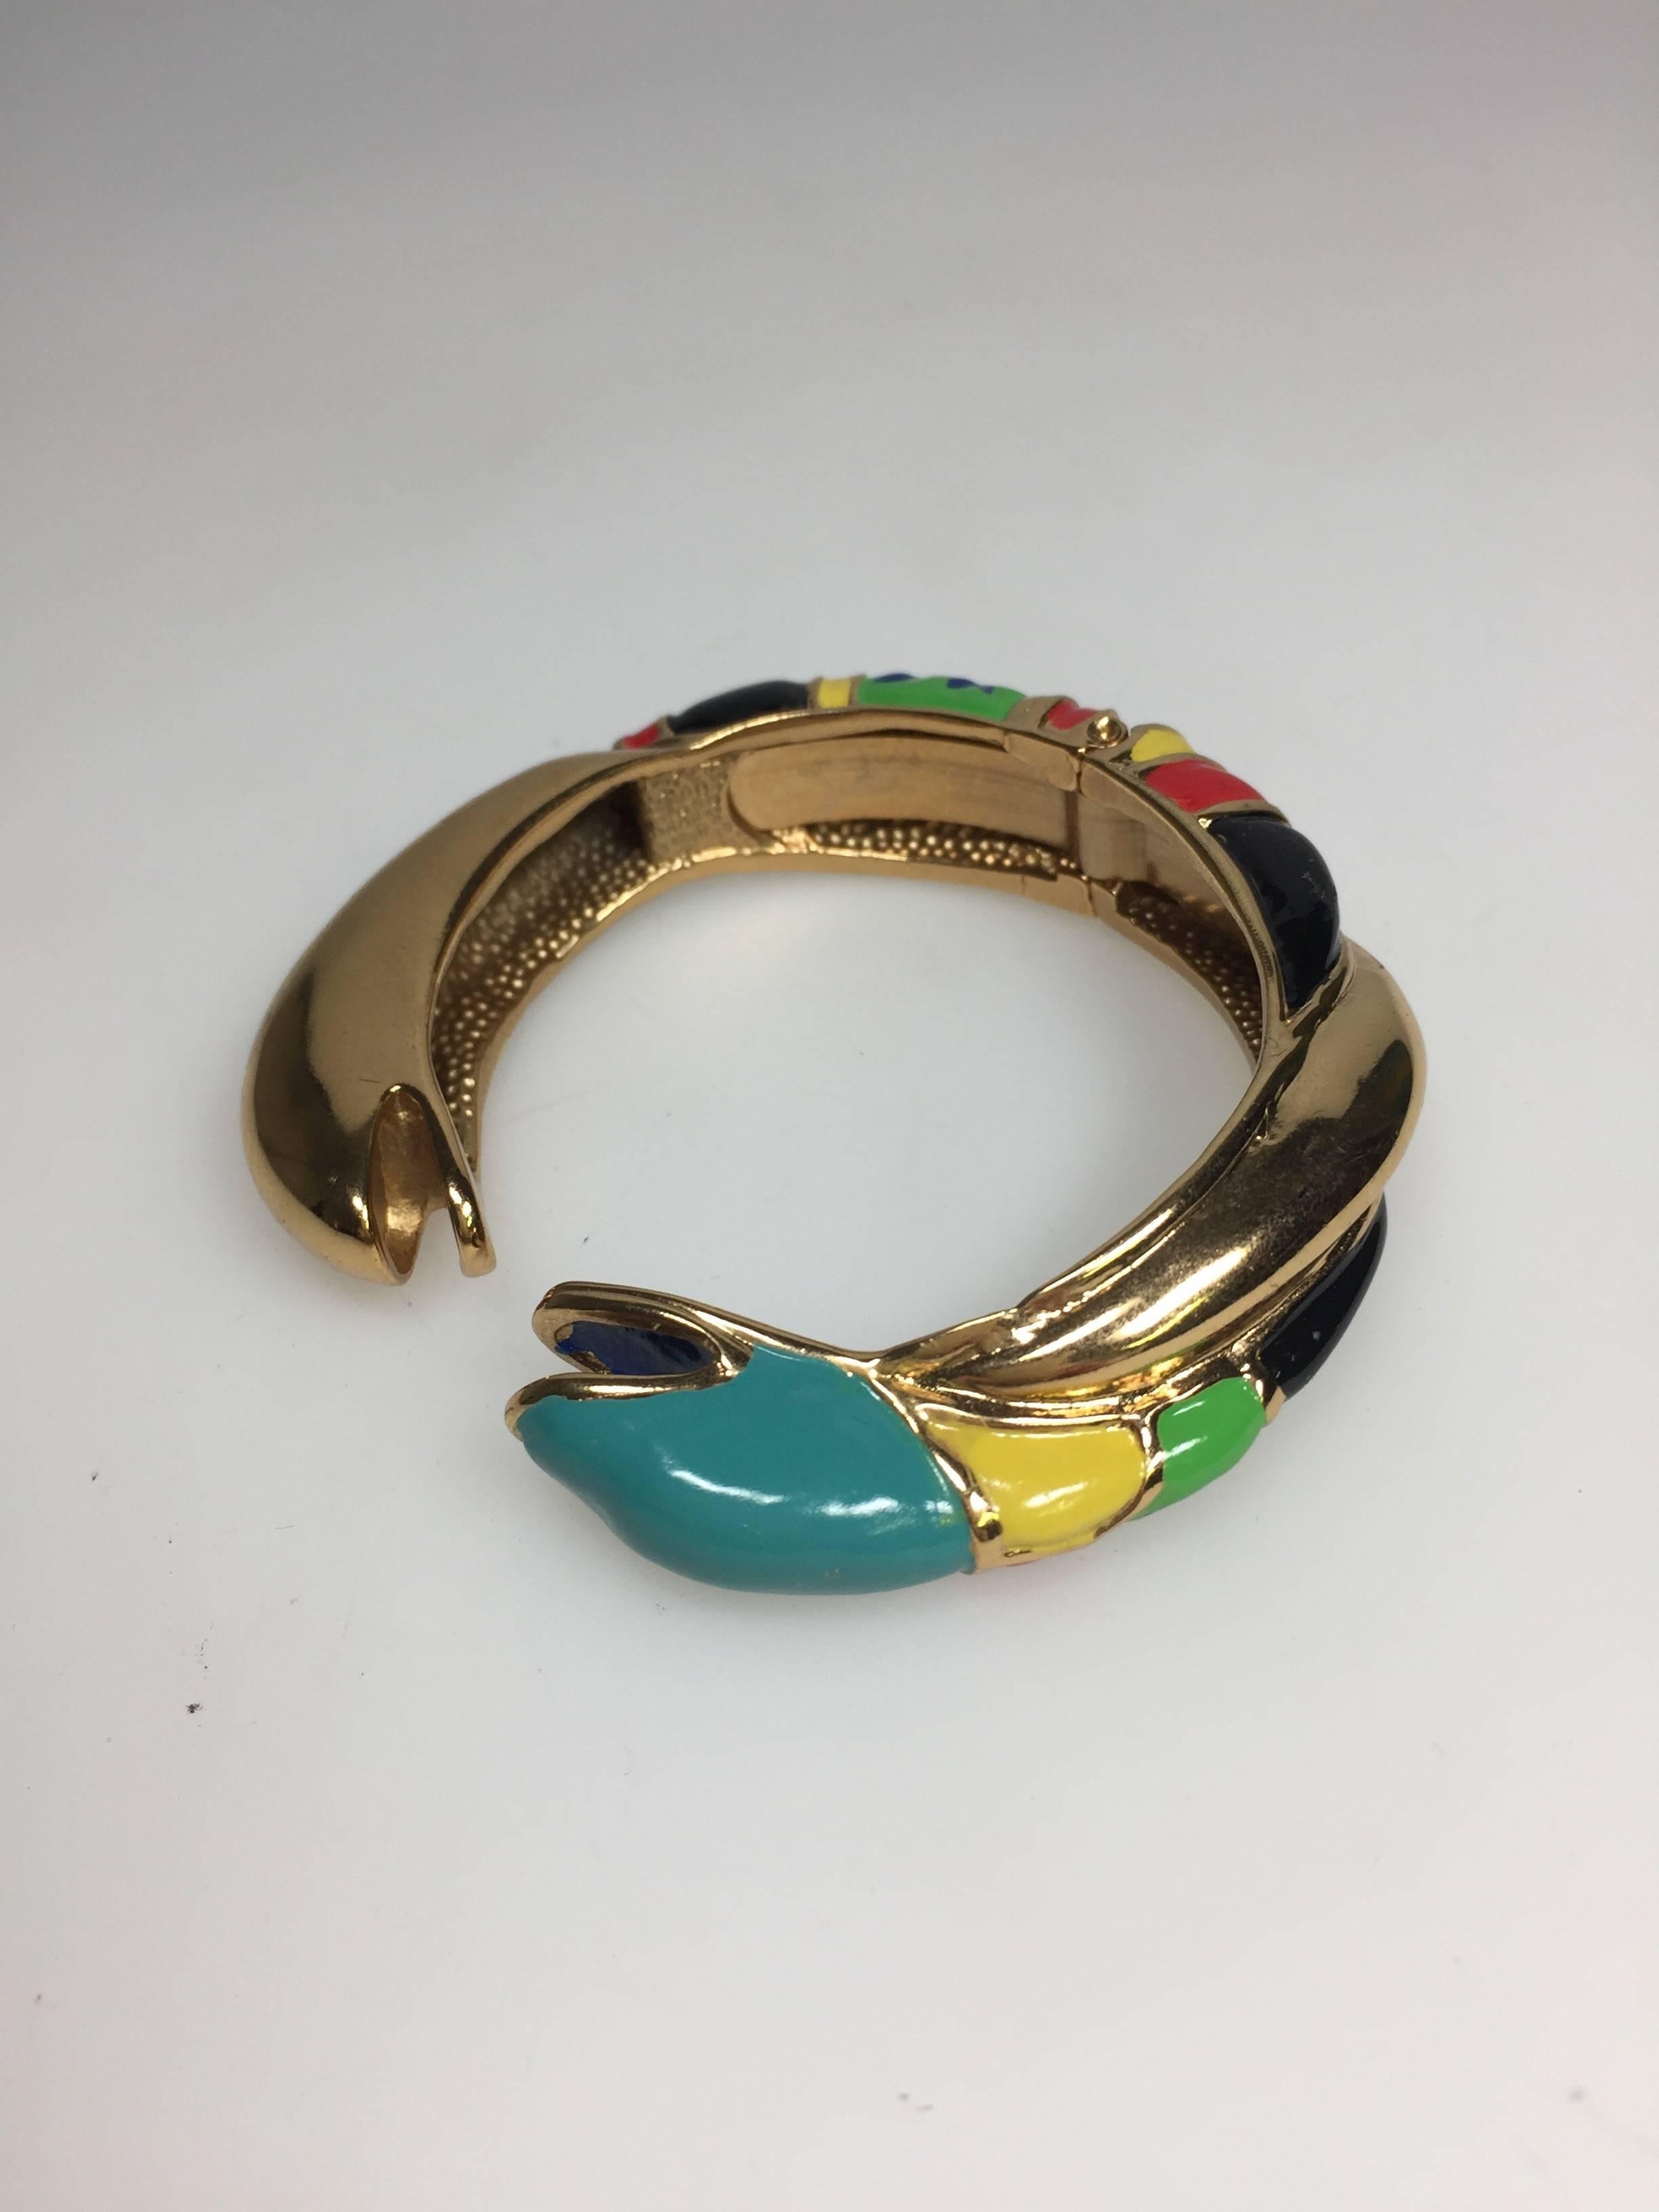 Gild and enamelled metal articulated bracelet designed by Niky de Saint Phalle ca 1980

Fits a medium wrist